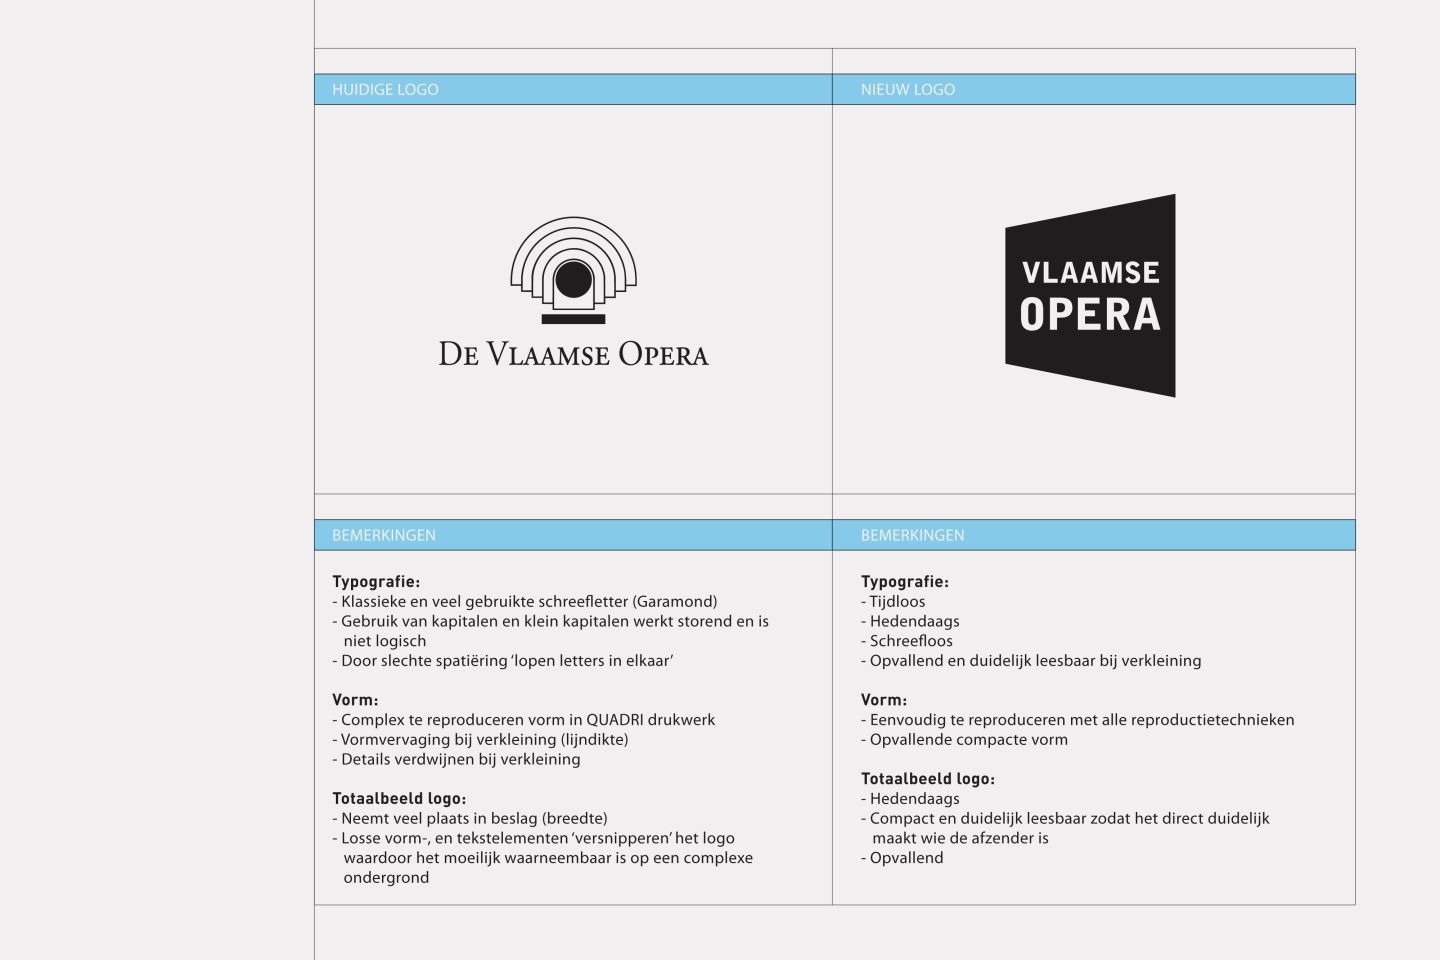 hugo-puttaert-visionandfactory-vlaamse-opera